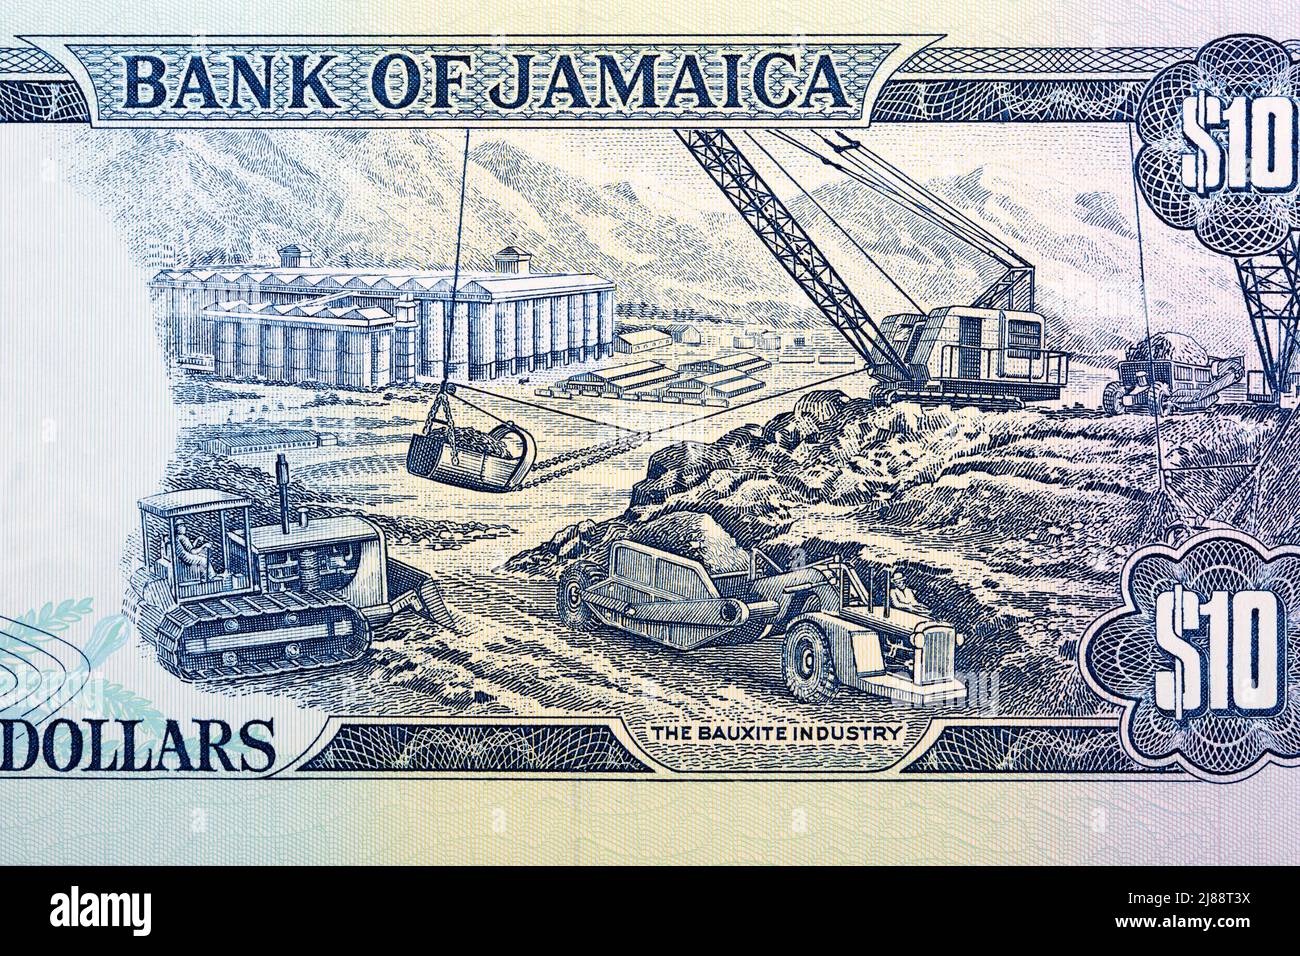 L'industria bauxite da soldi giamaicani - dollari Foto Stock